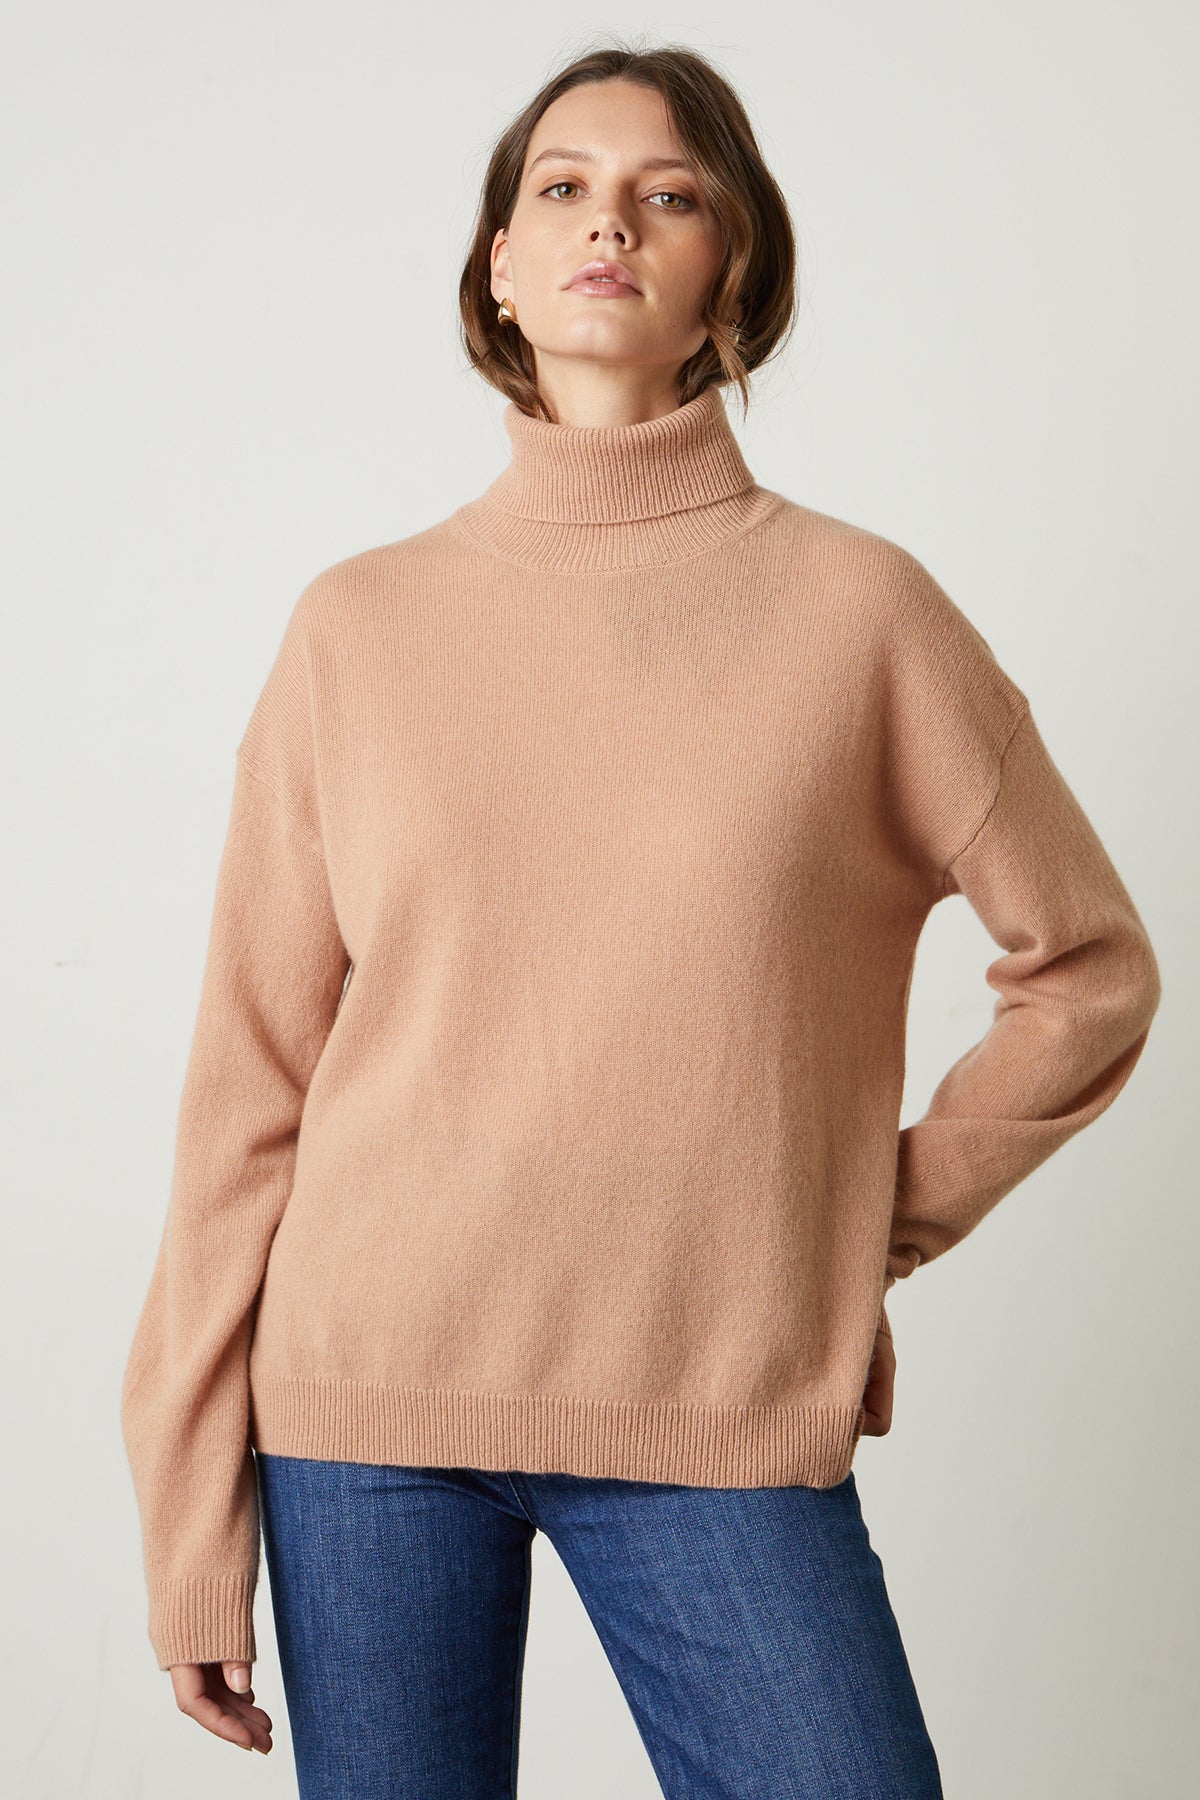 Velvet Women's Ellie Mockneck Cashmere Sweater - Maple Brown - Size M